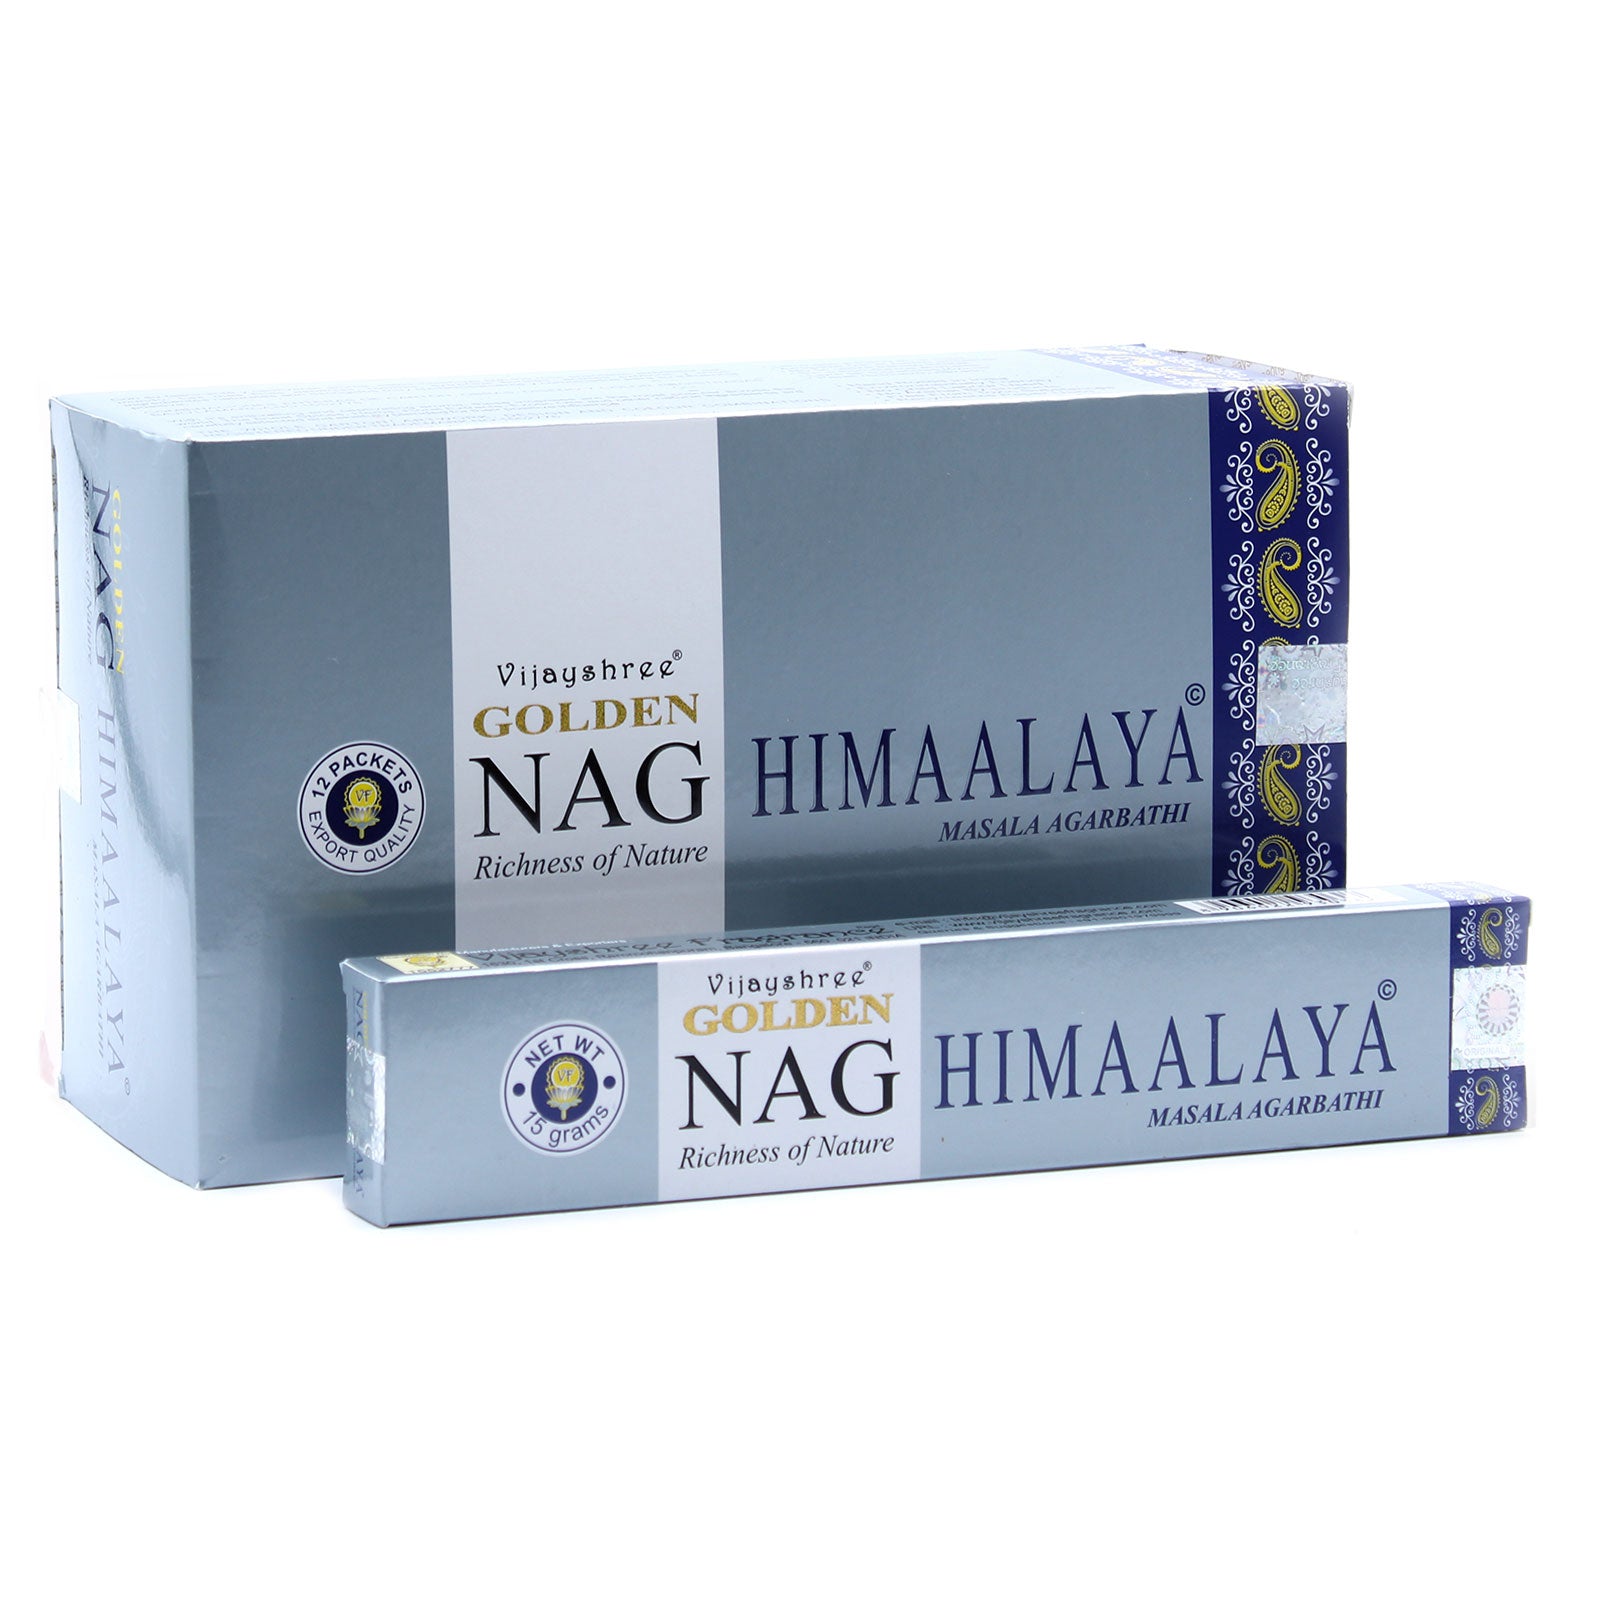 View 15g Golden Nag Himalaya Incense information